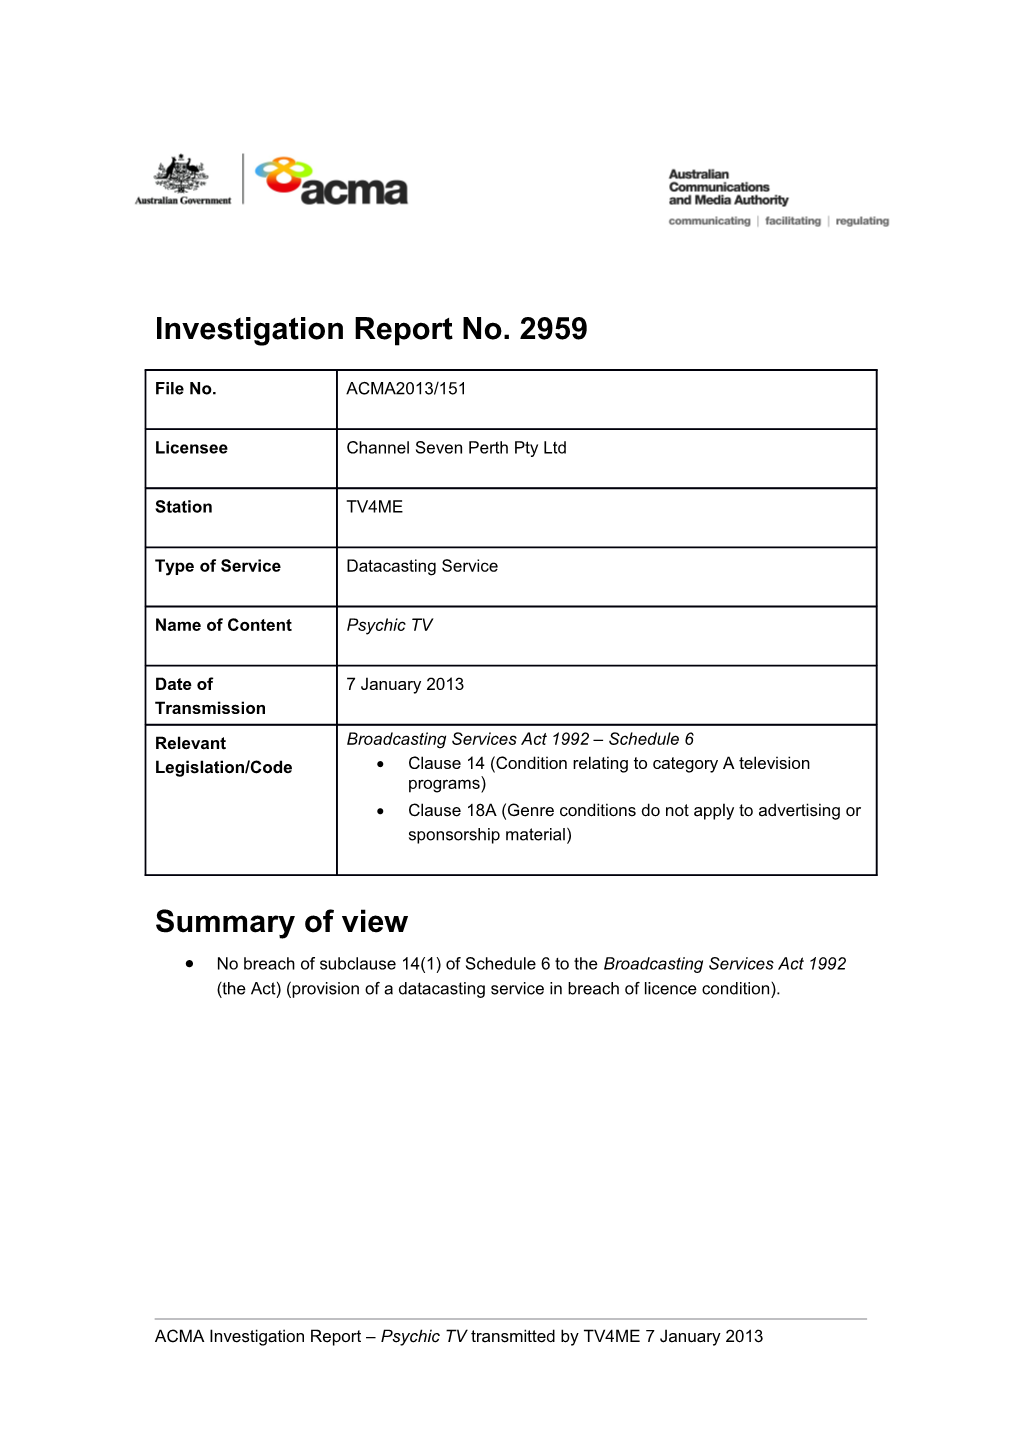 TV4MR - ACMA Investigation Report 2959